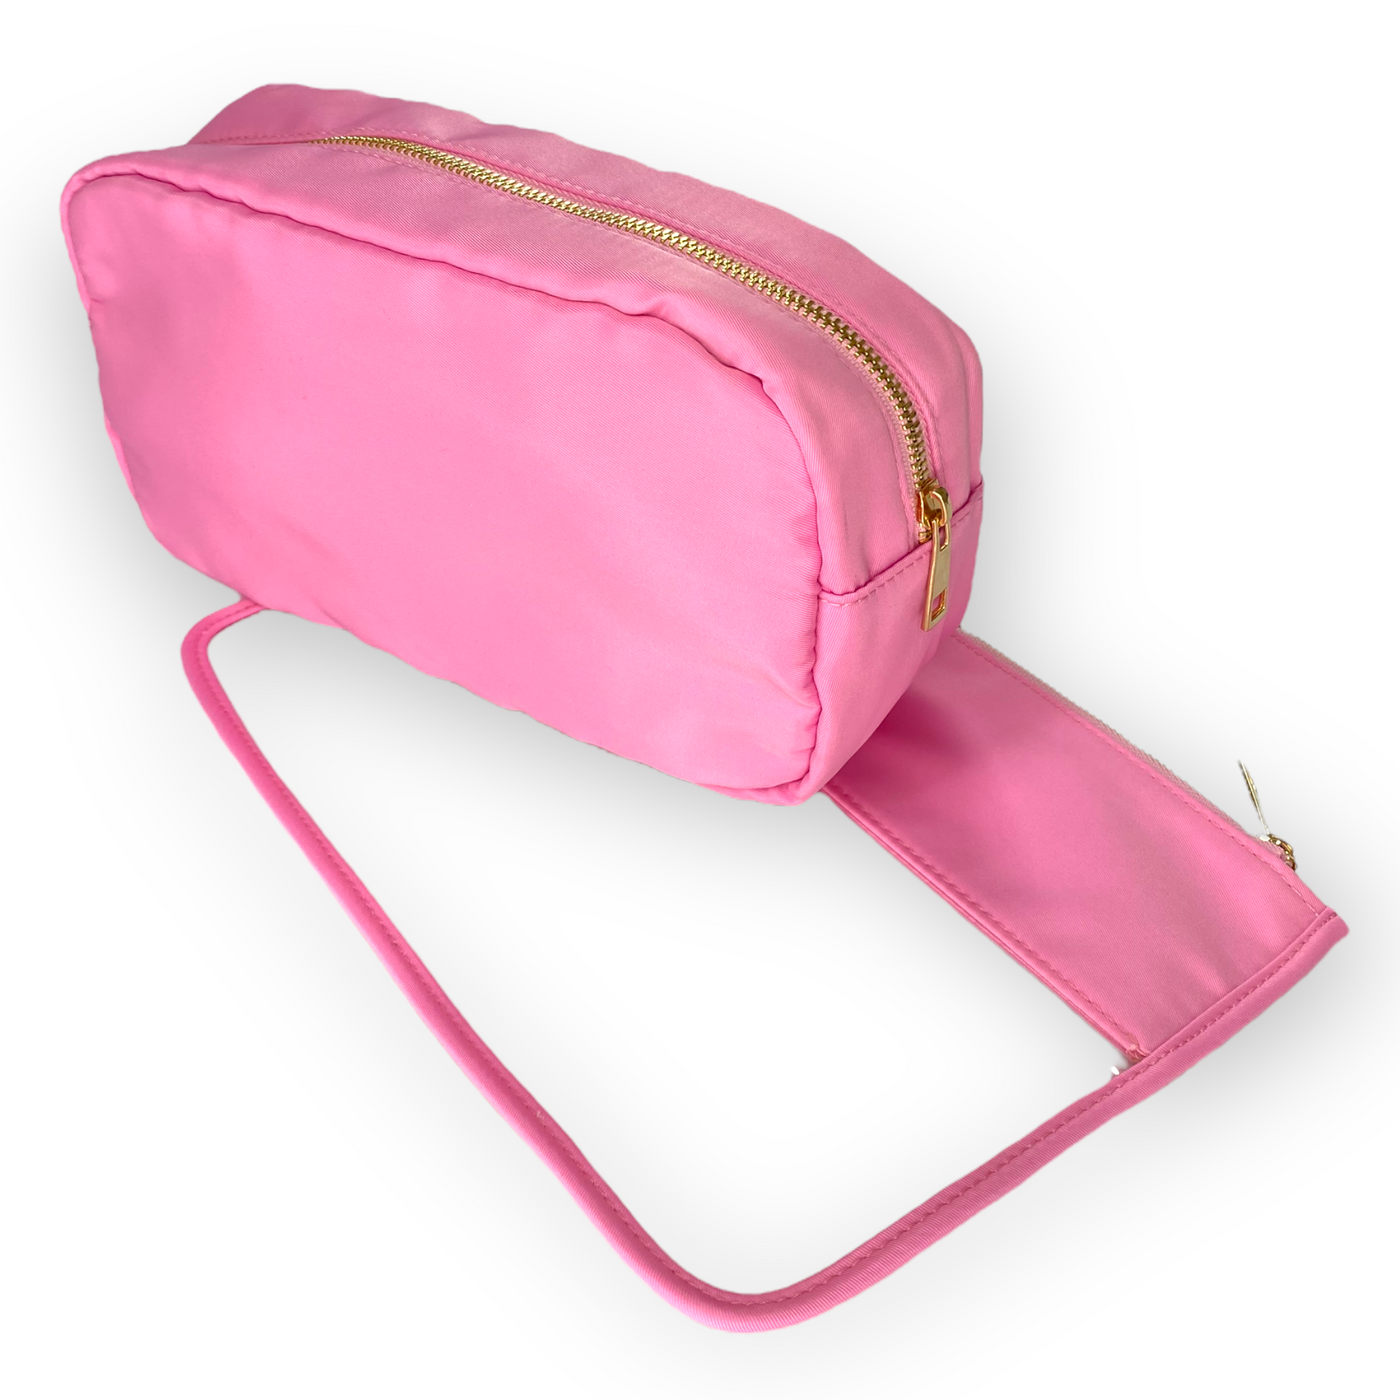 Personalised Makeup Bag/Travel Set - Pink - Pink Waters 